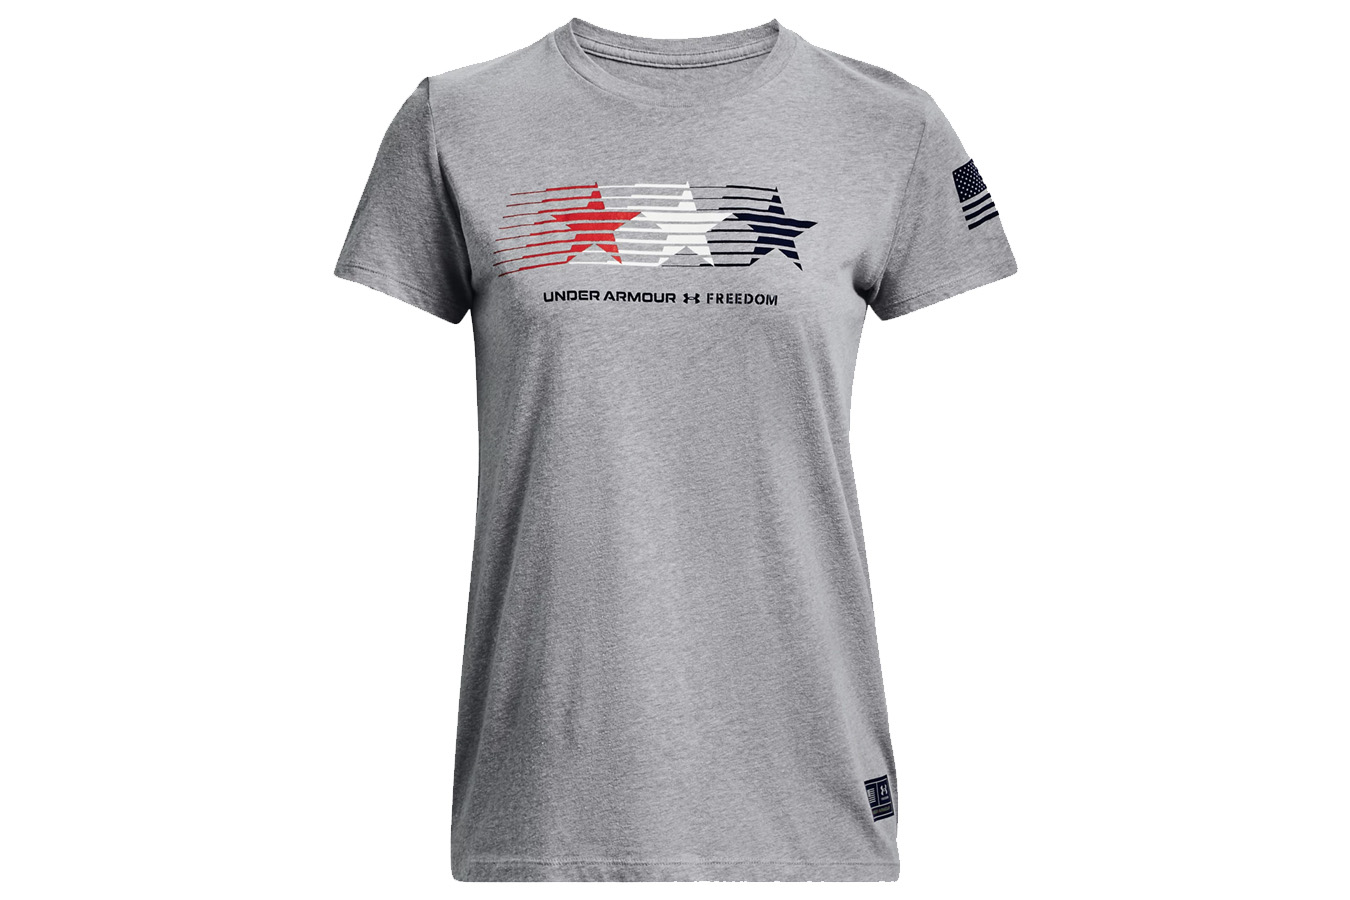 Under Armour Women's UA Freedom Star T-Shirt